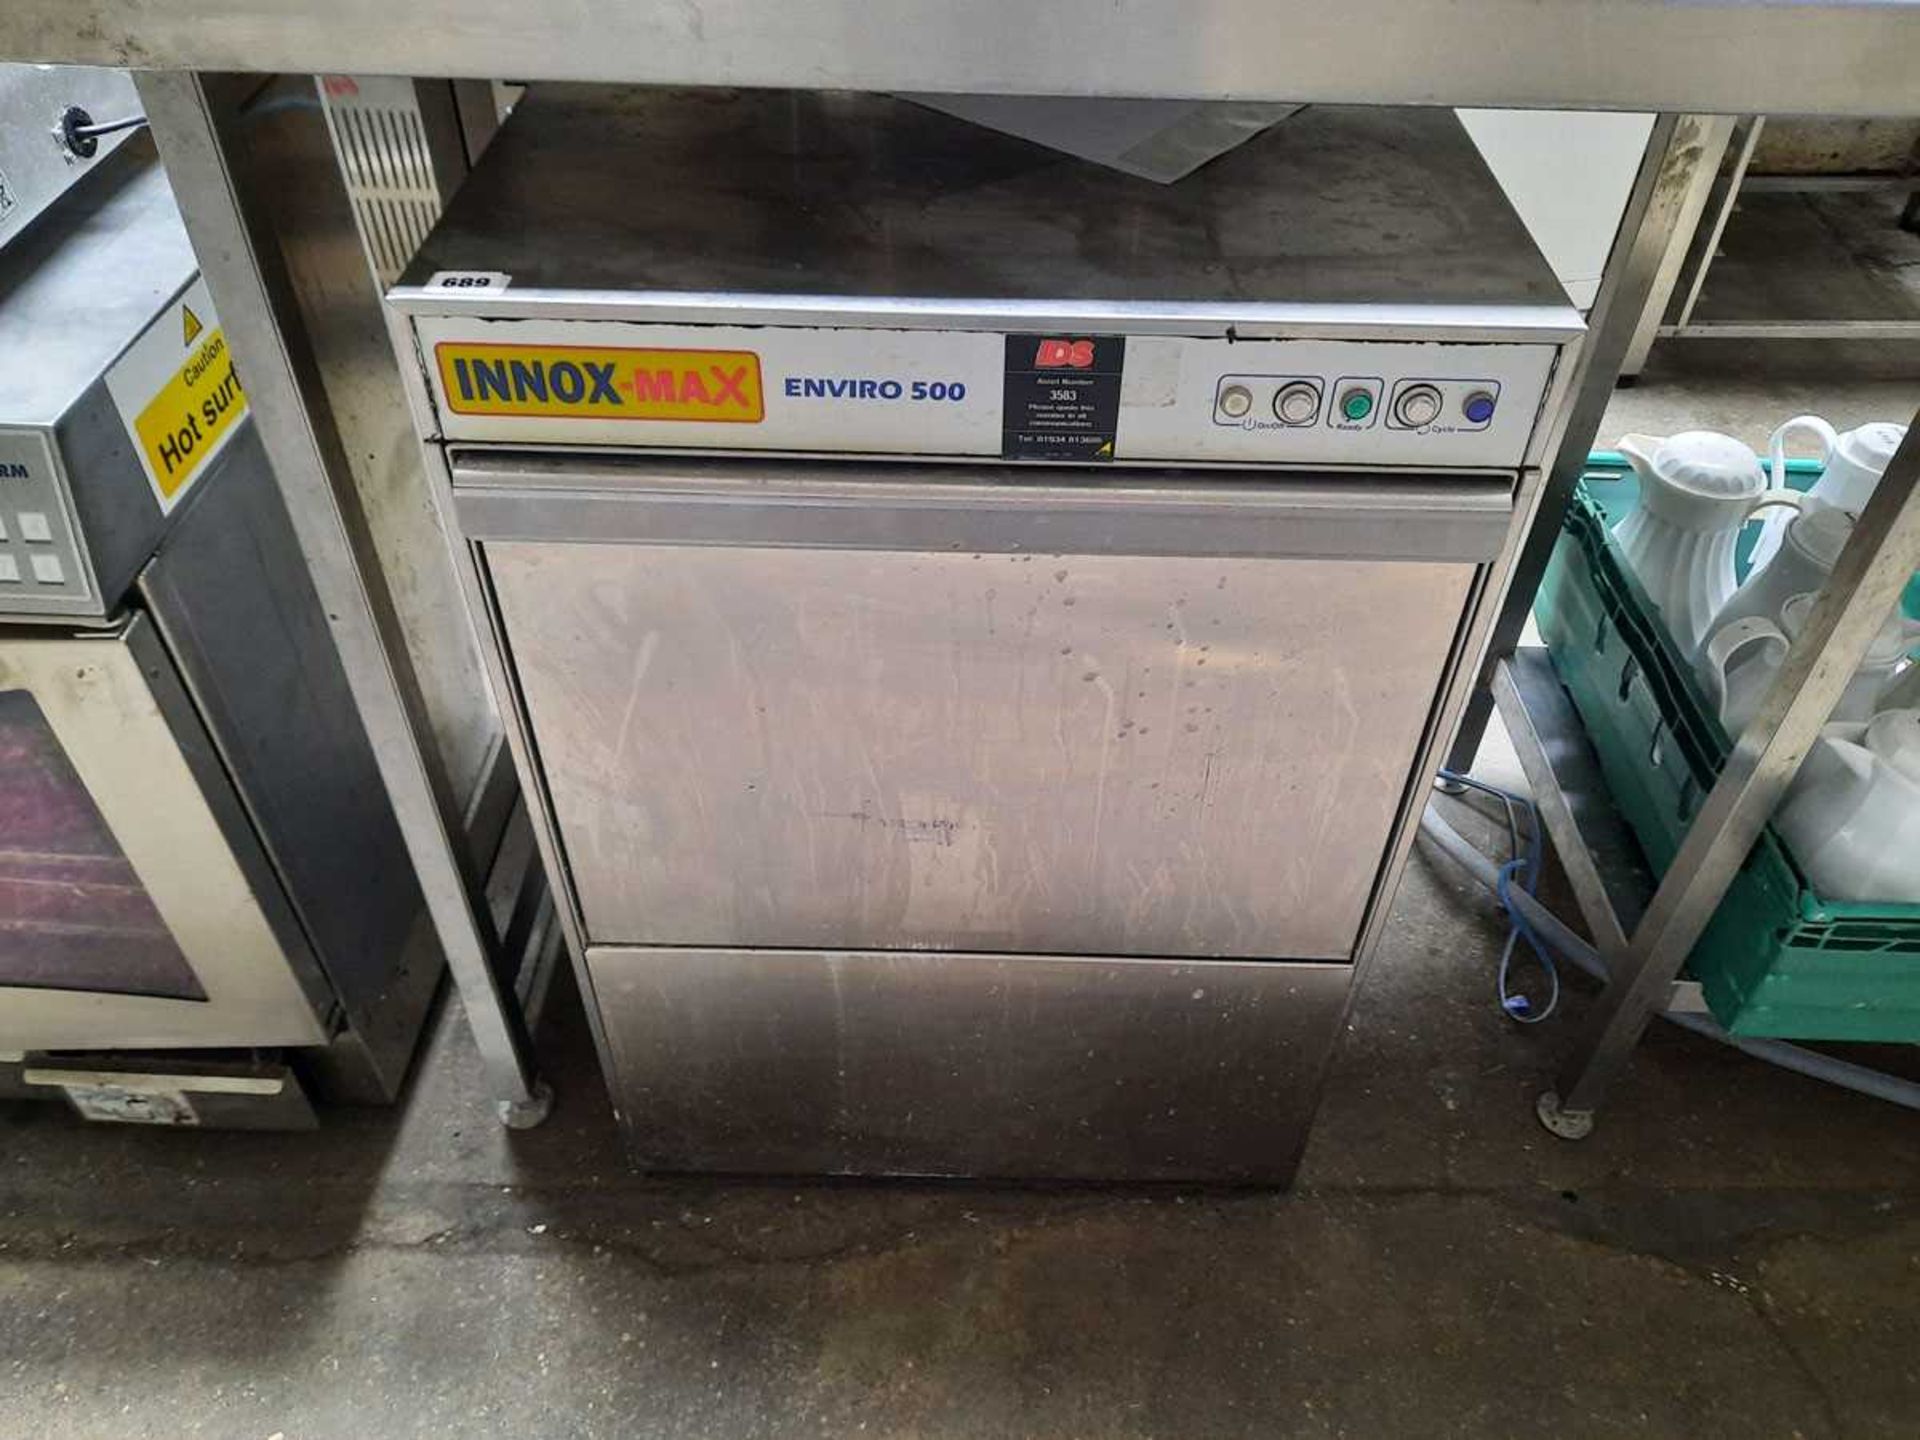 57cm Innox-Max Enviro 500 undercounter drop front washer